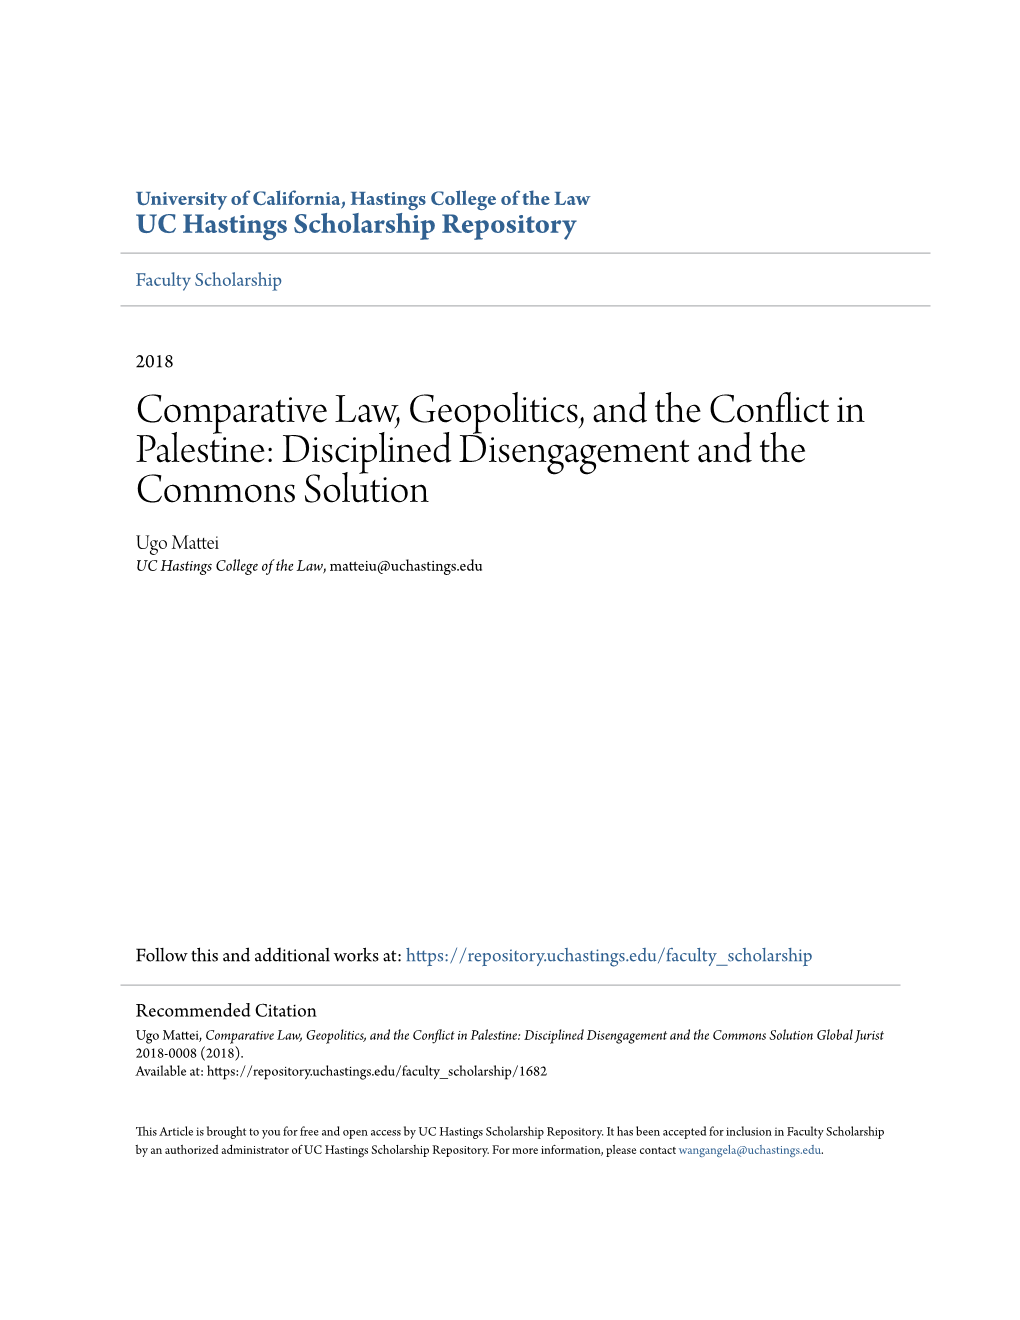 Comparative Law, Geopolitics, And